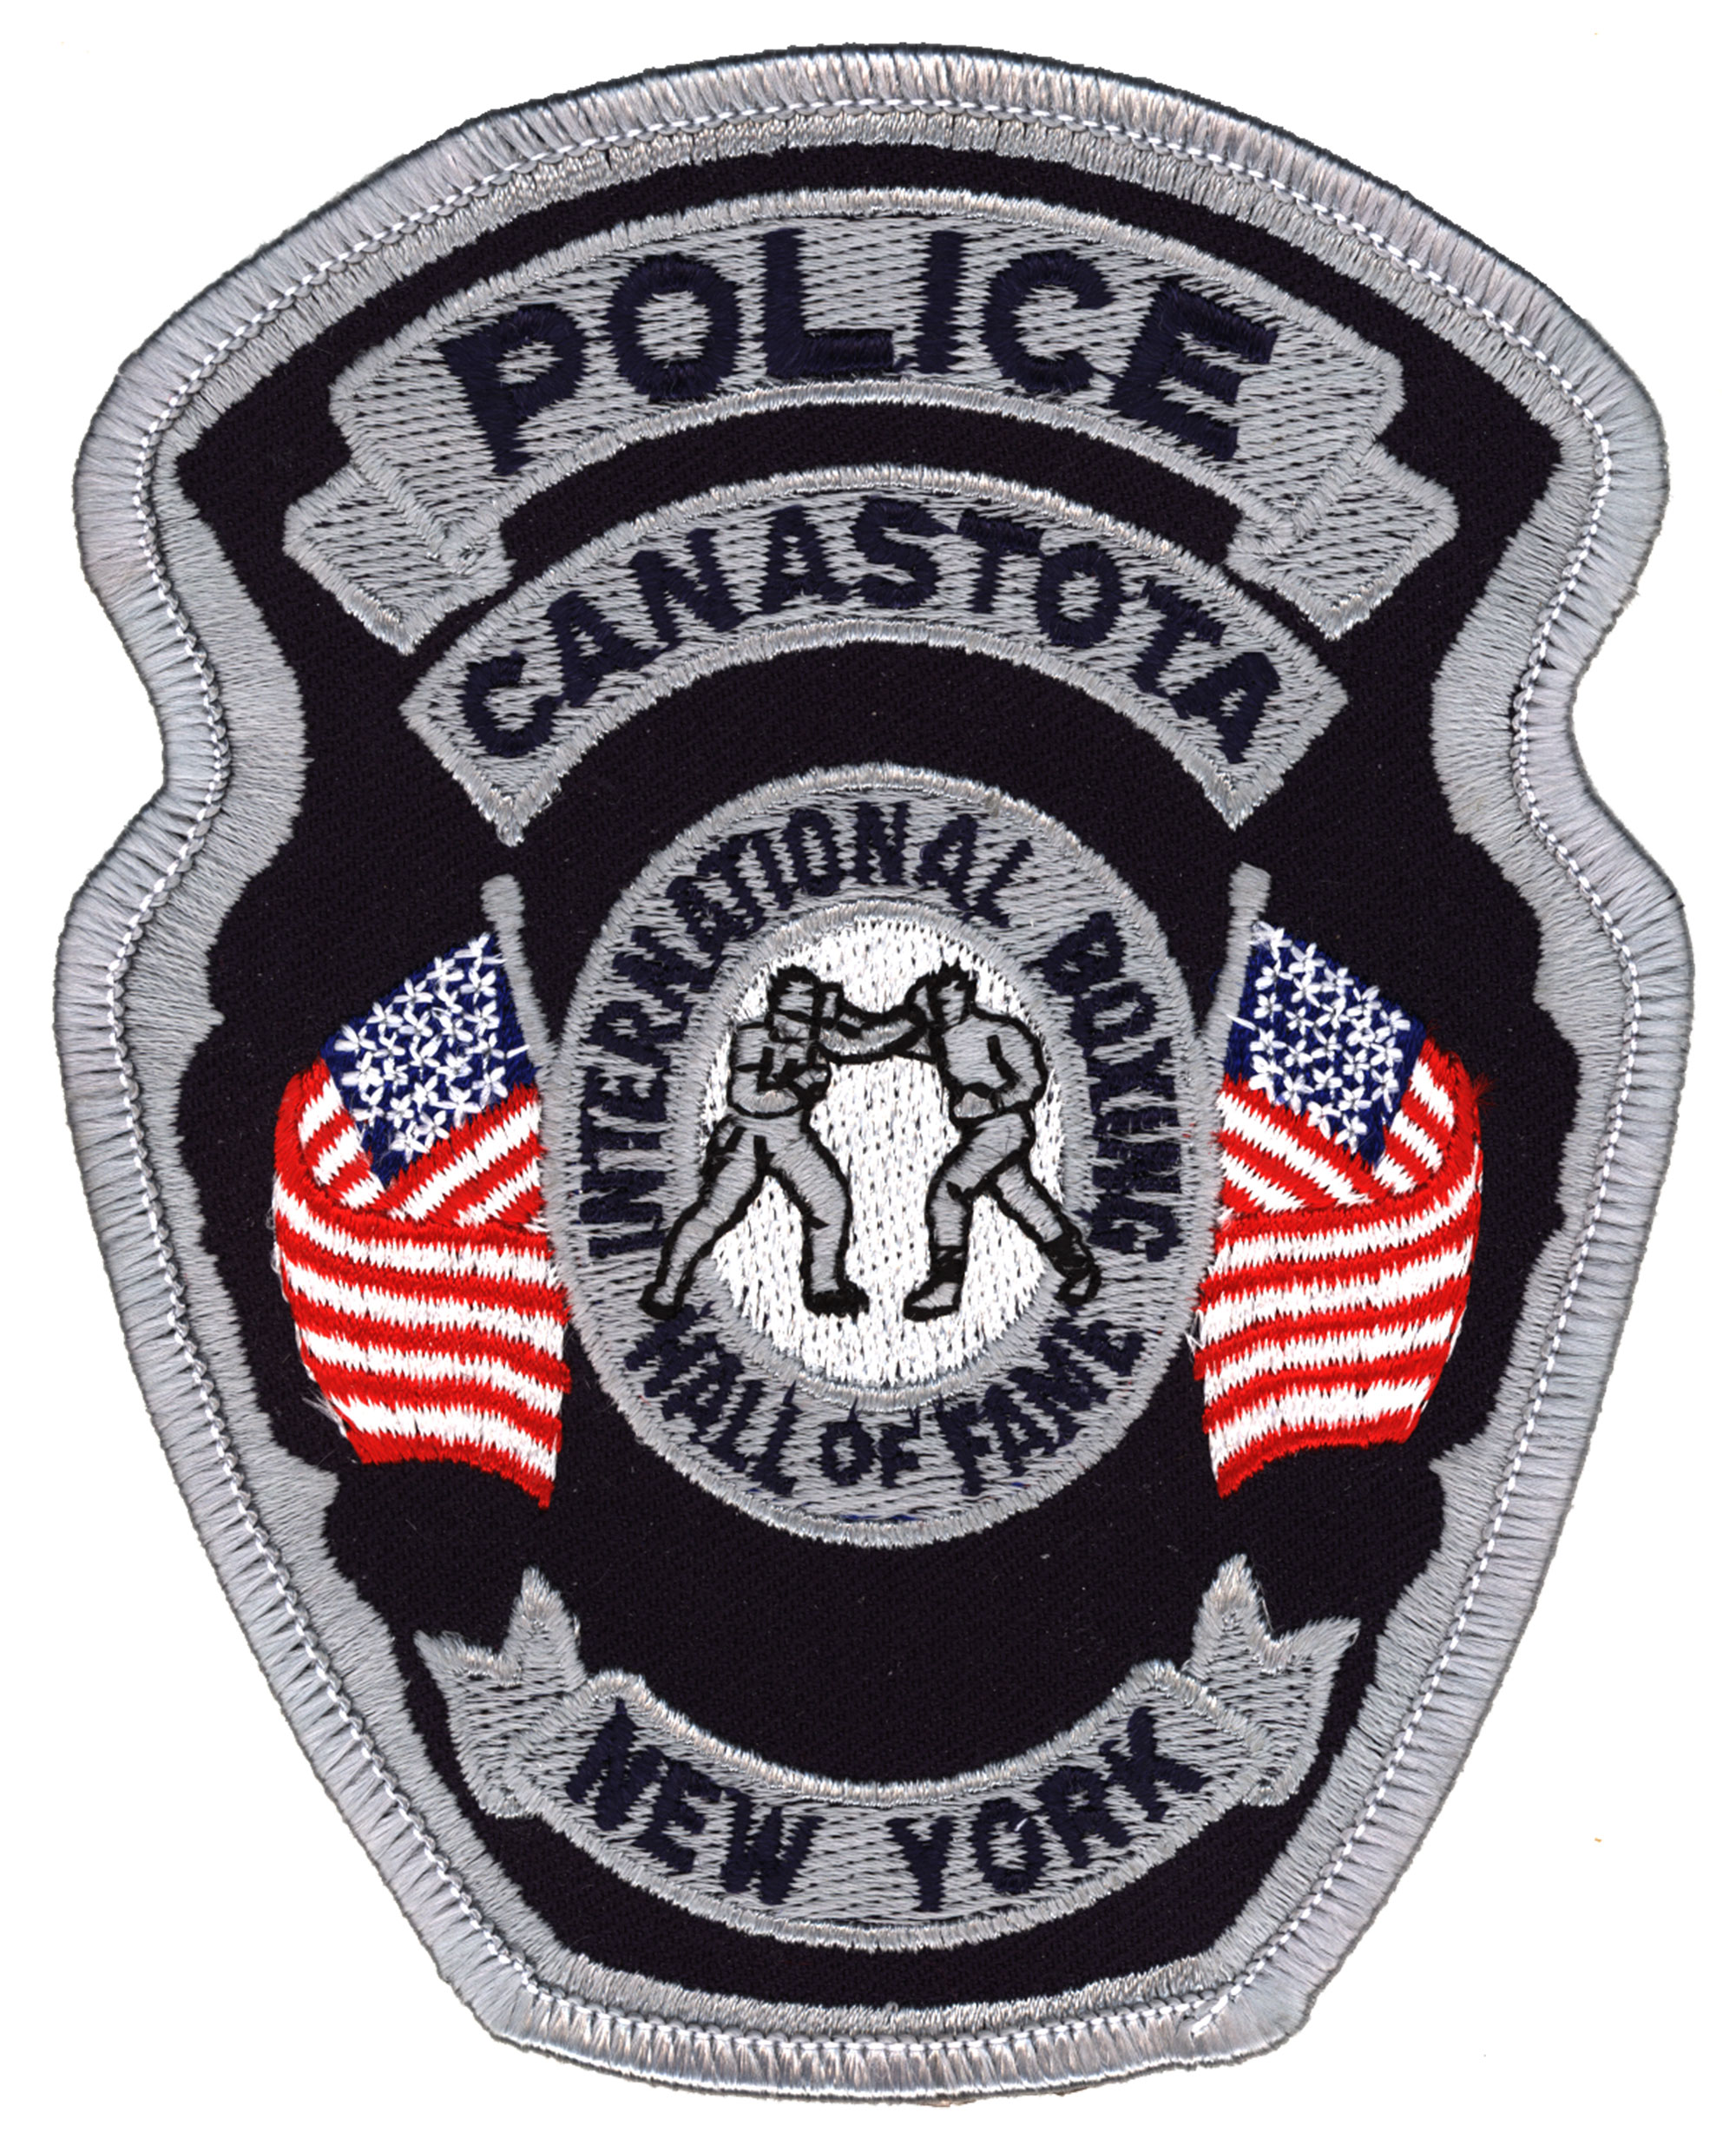 Patch Call: Canastota, New York, Police Department